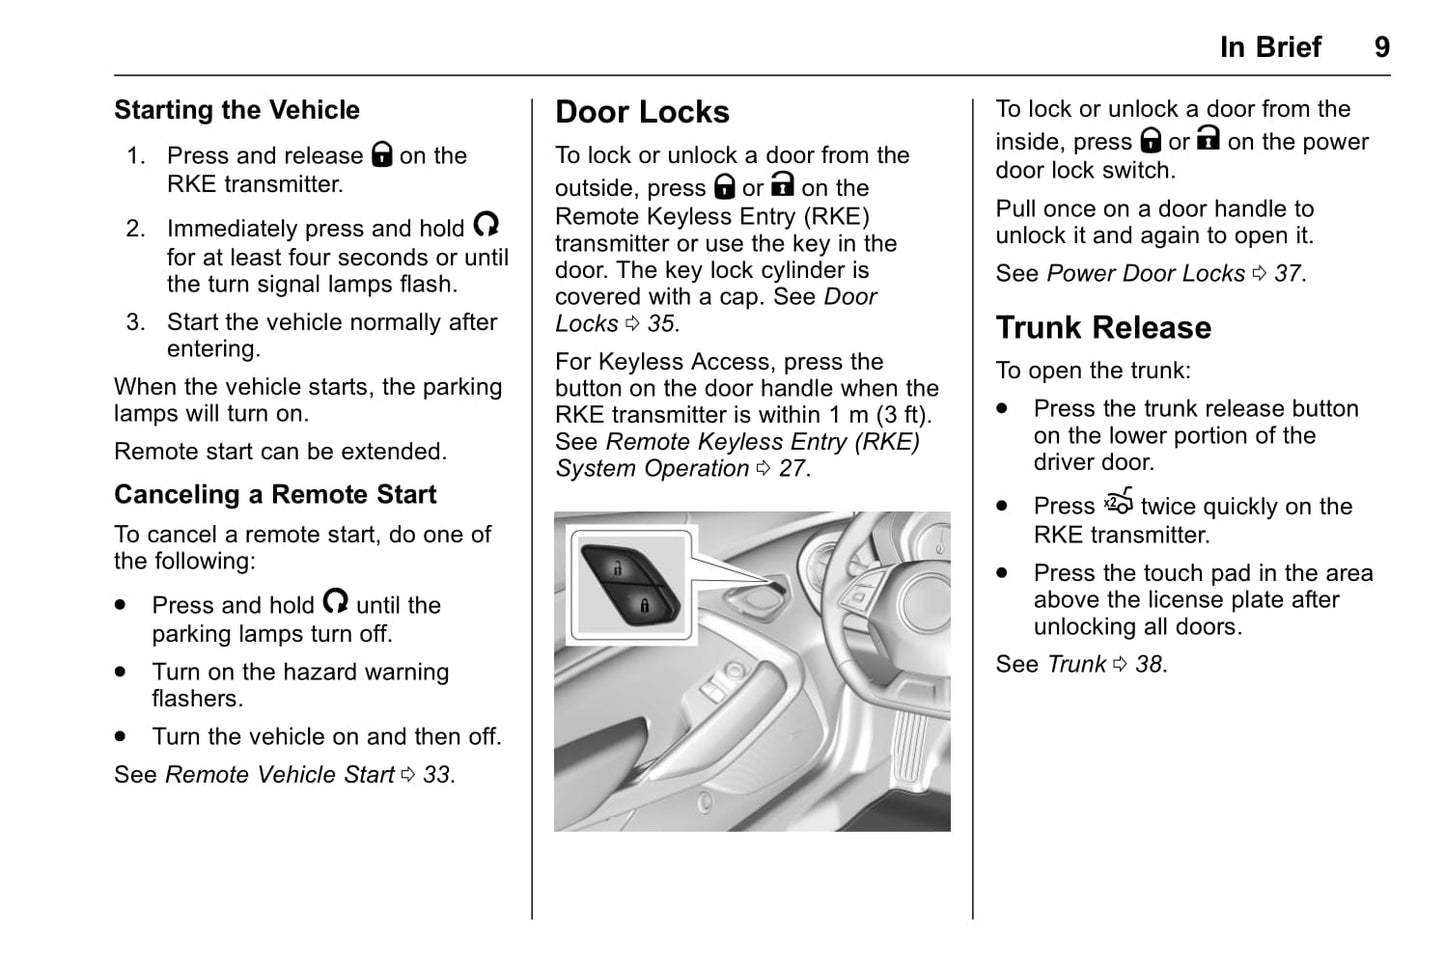 2016 Chevrolet Camaro Owner's Manual | English